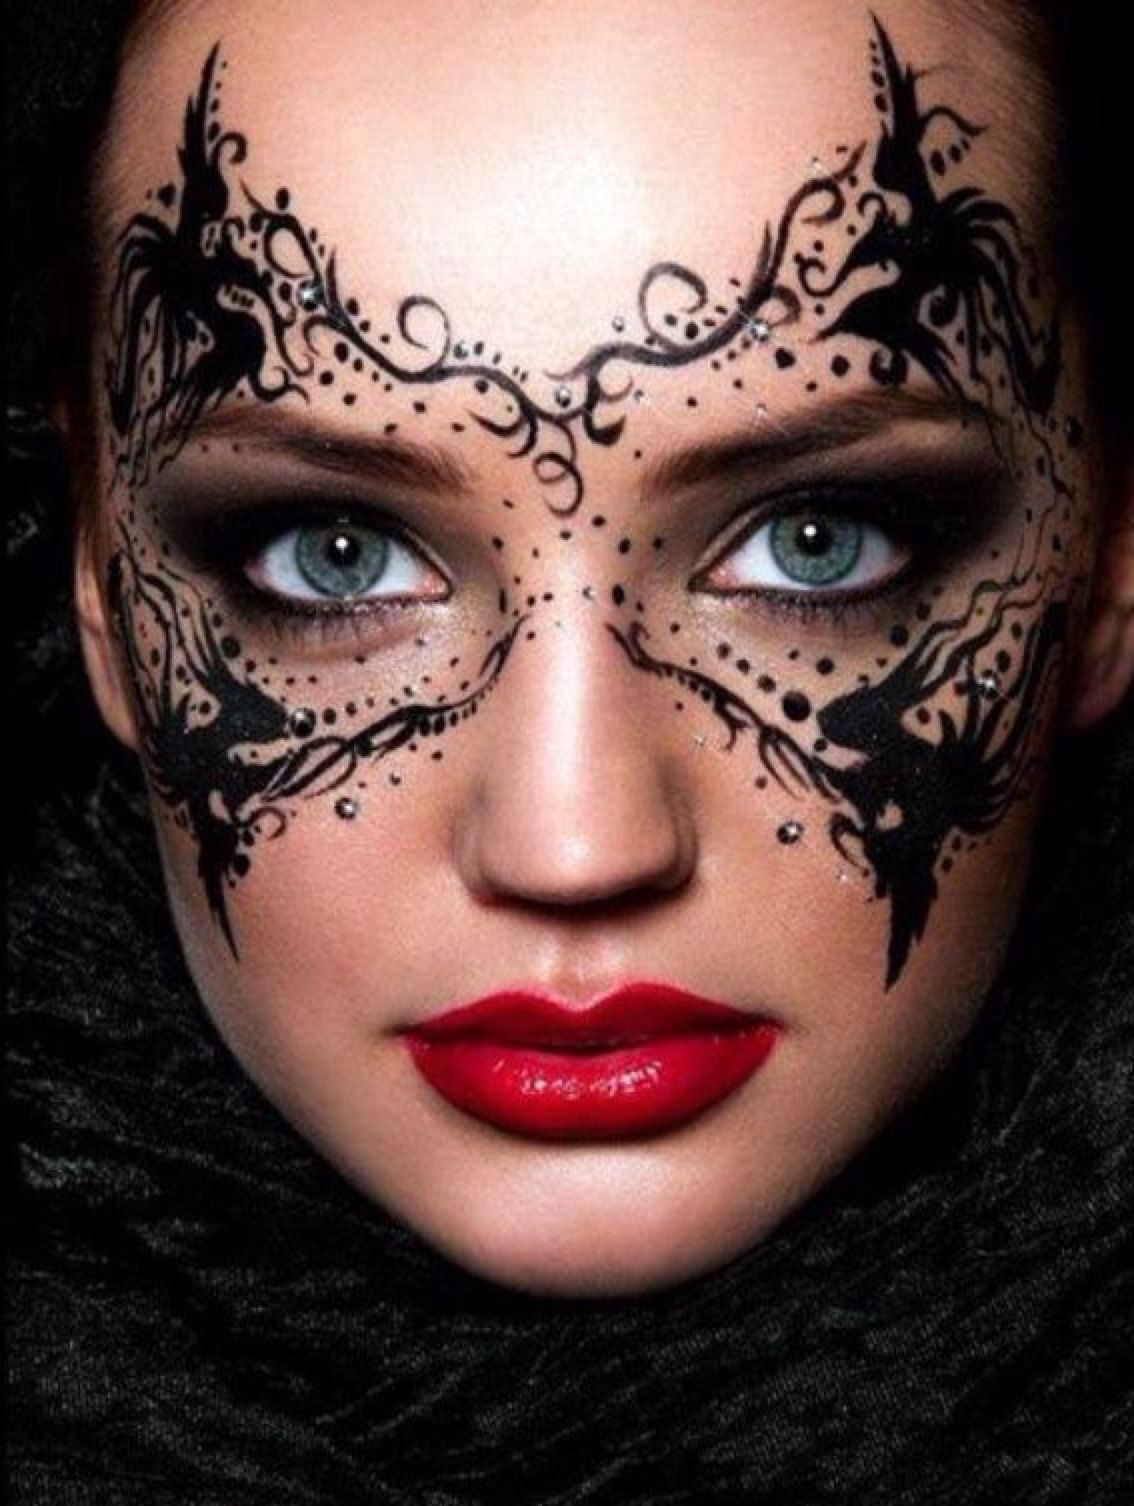 Masquerade Mask makeup for Halloween